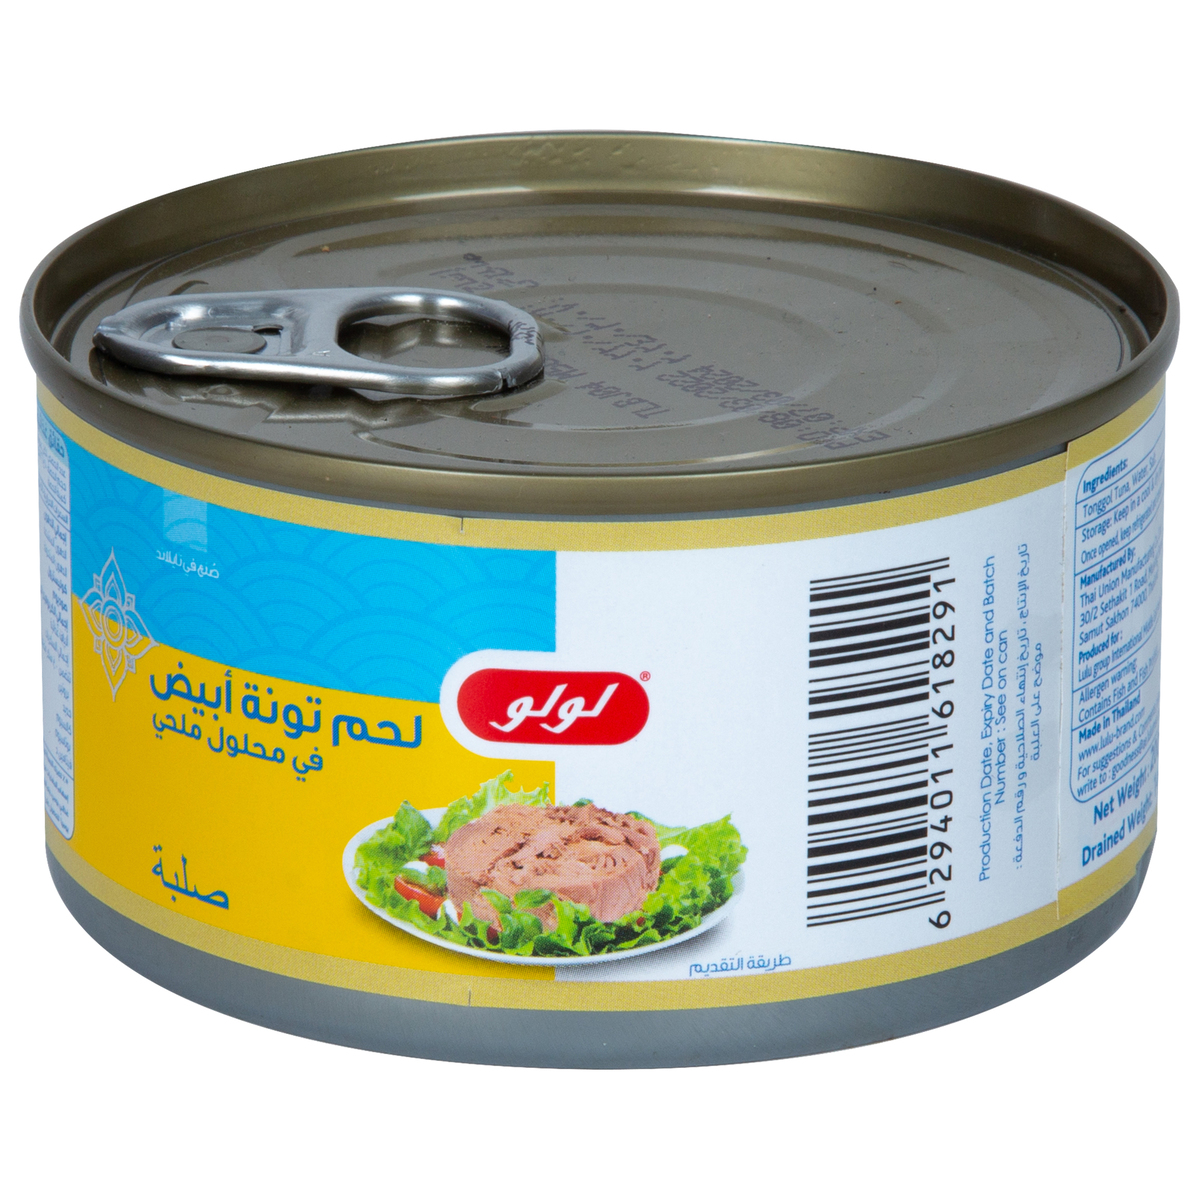 LuLu White Meat Tuna Solid In Brine 200 g